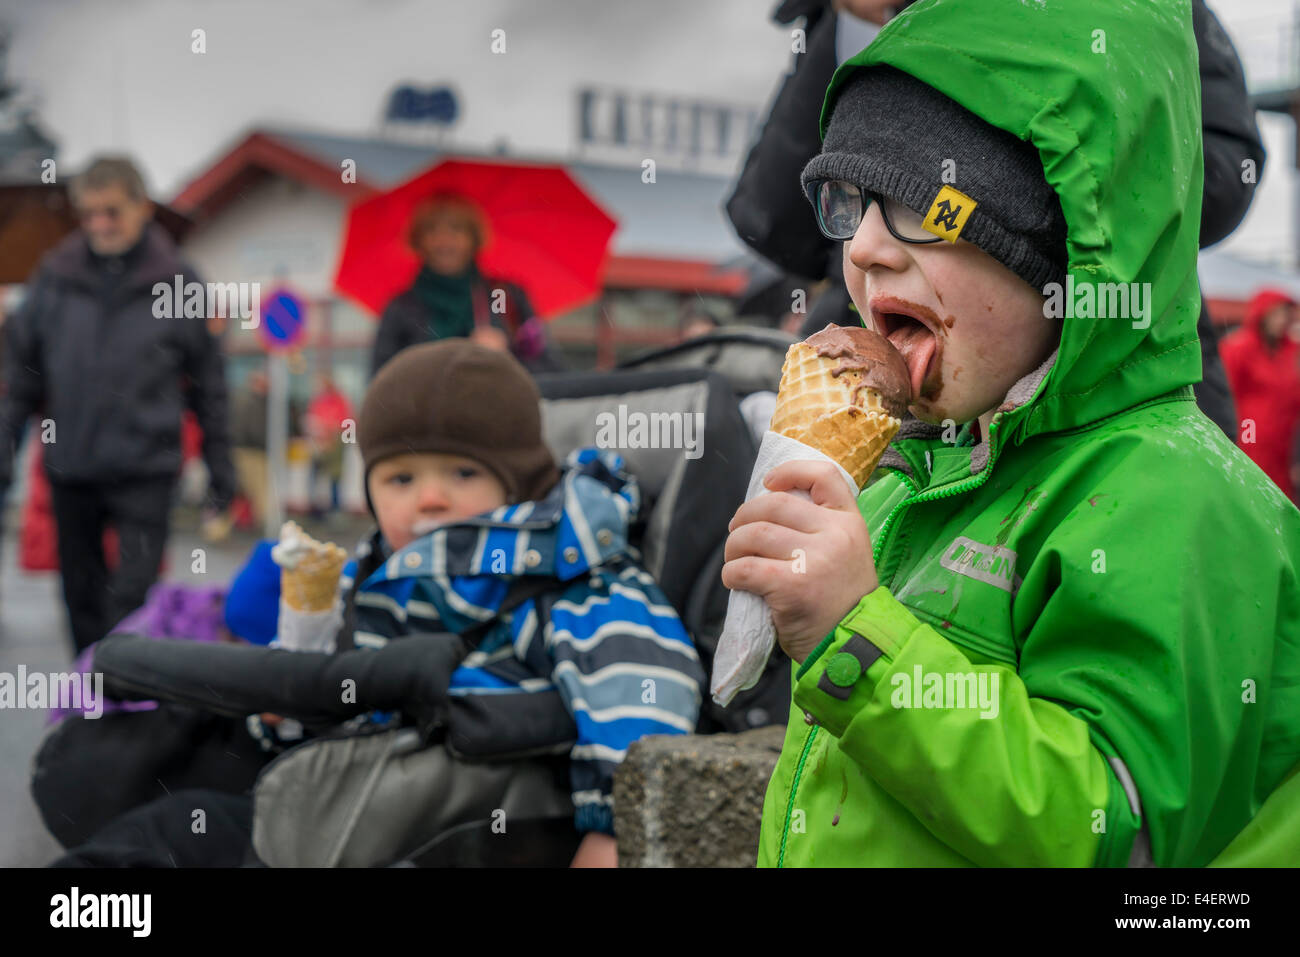 Children eating ice cream, Reykjavik, Iceland Stock Photo